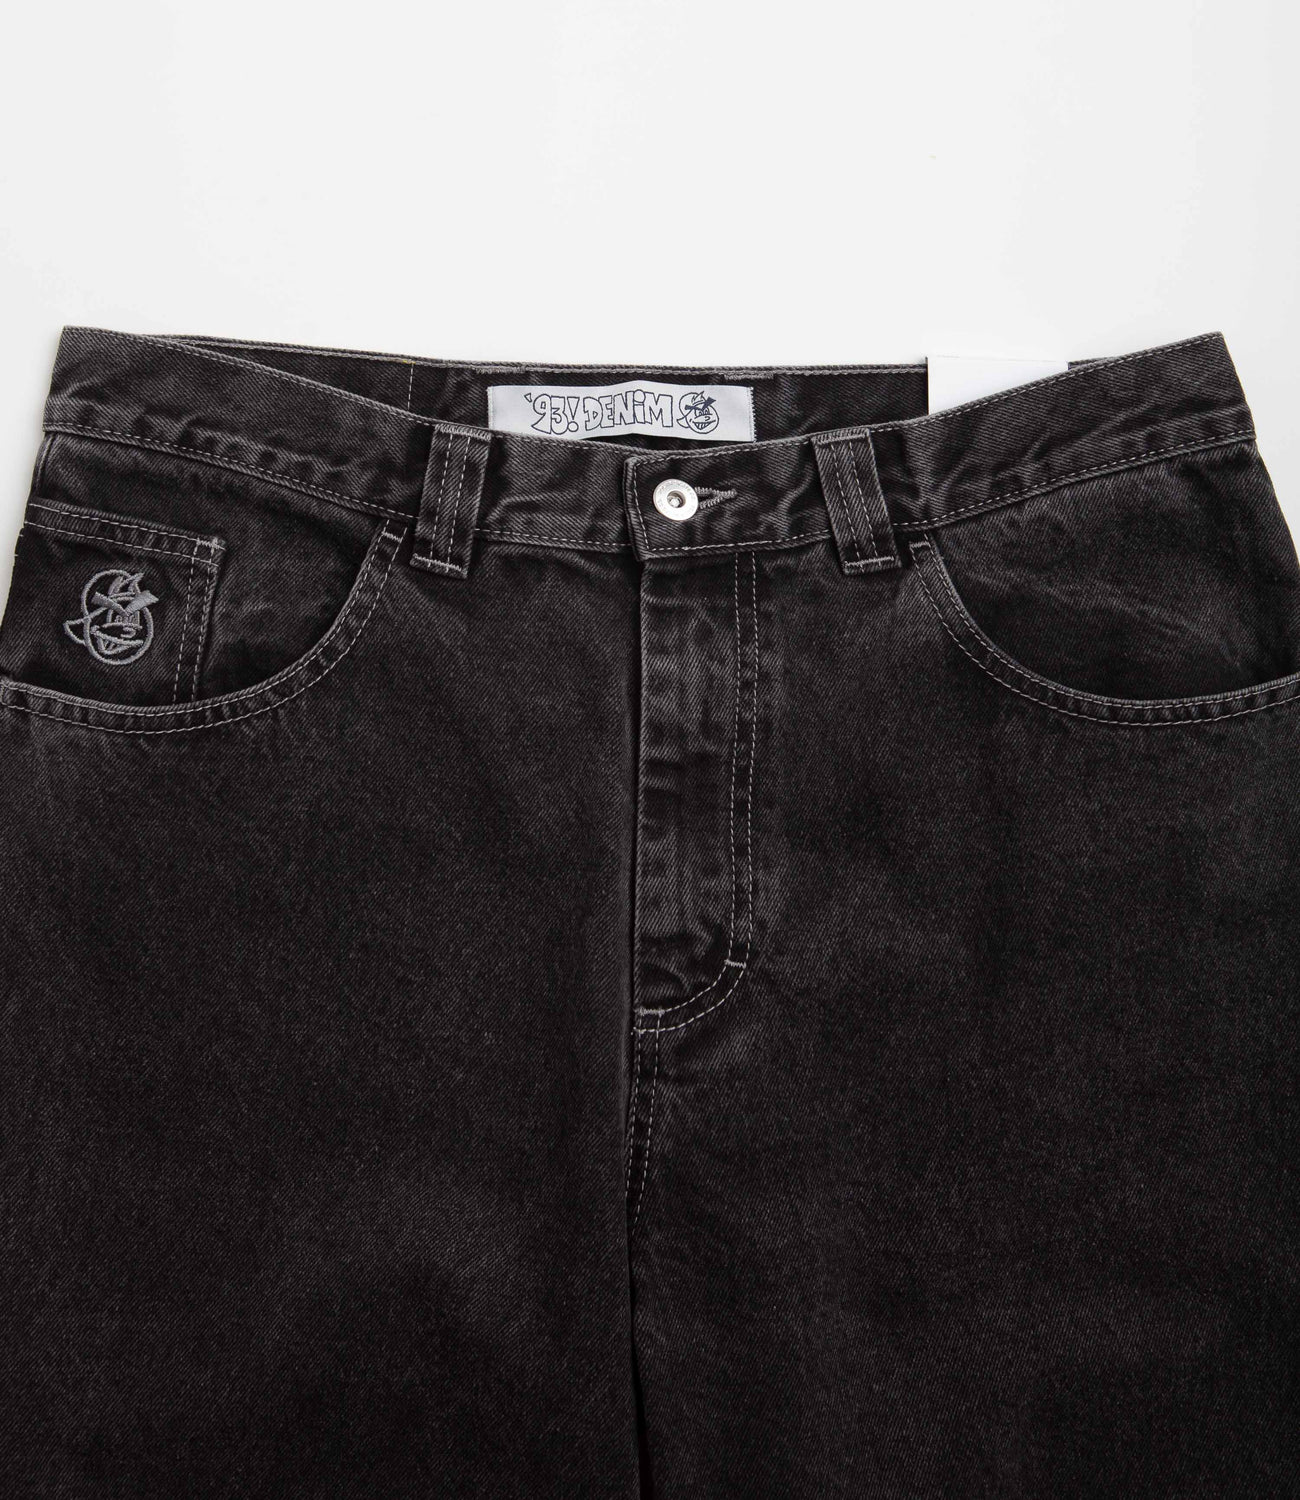 Polar 93 Denim Jeans - Silver Black / Silver | Flatspot